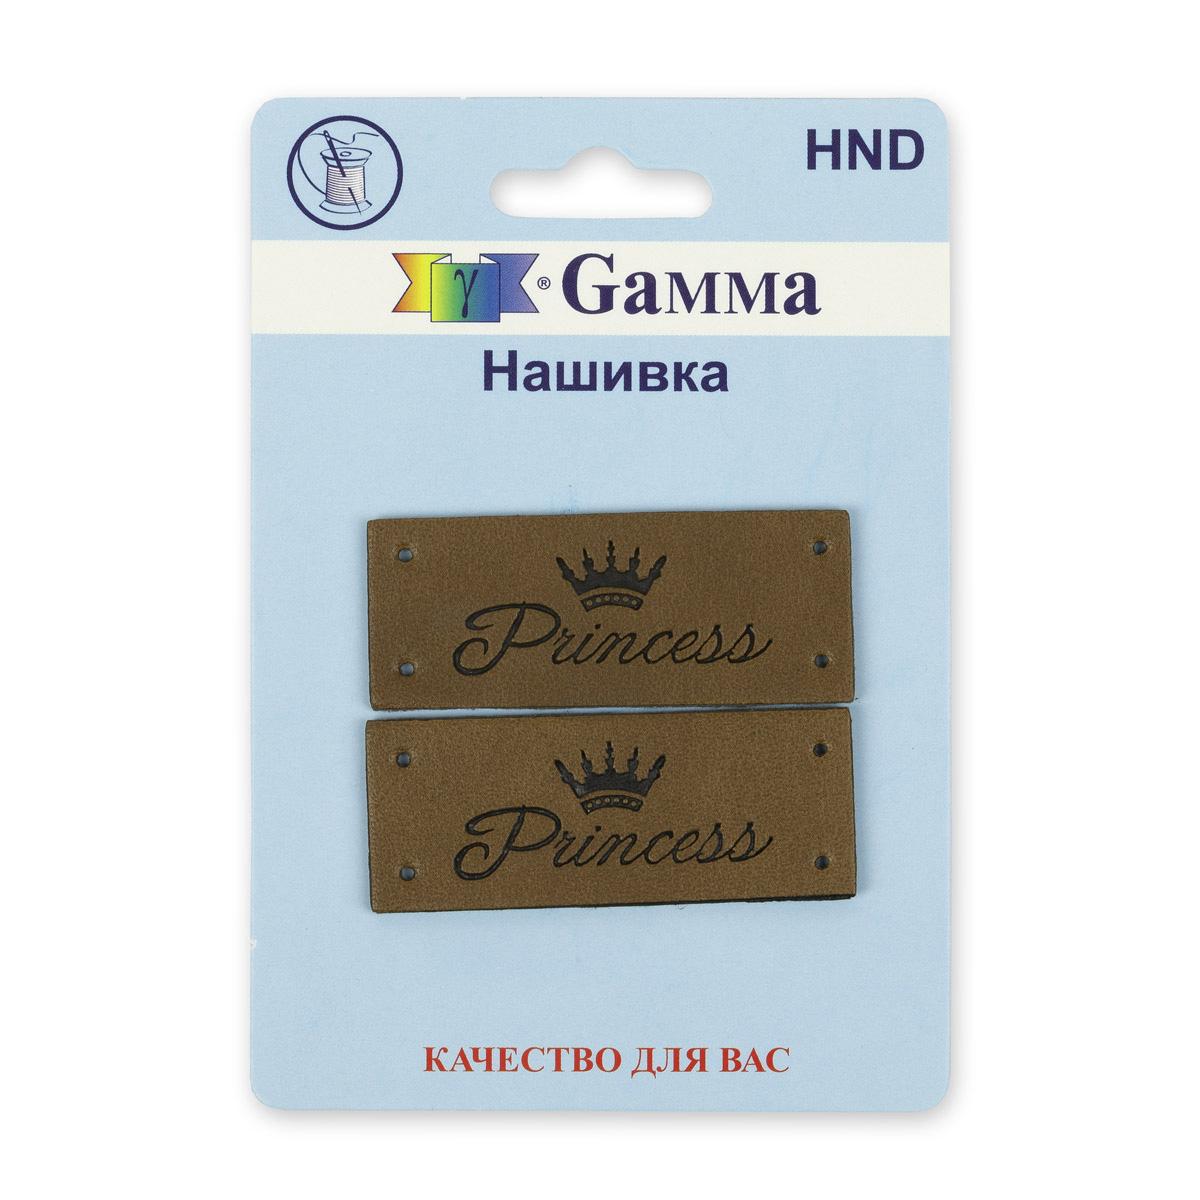 Gamma HND Нашивка handmade 07 5х2 шт.